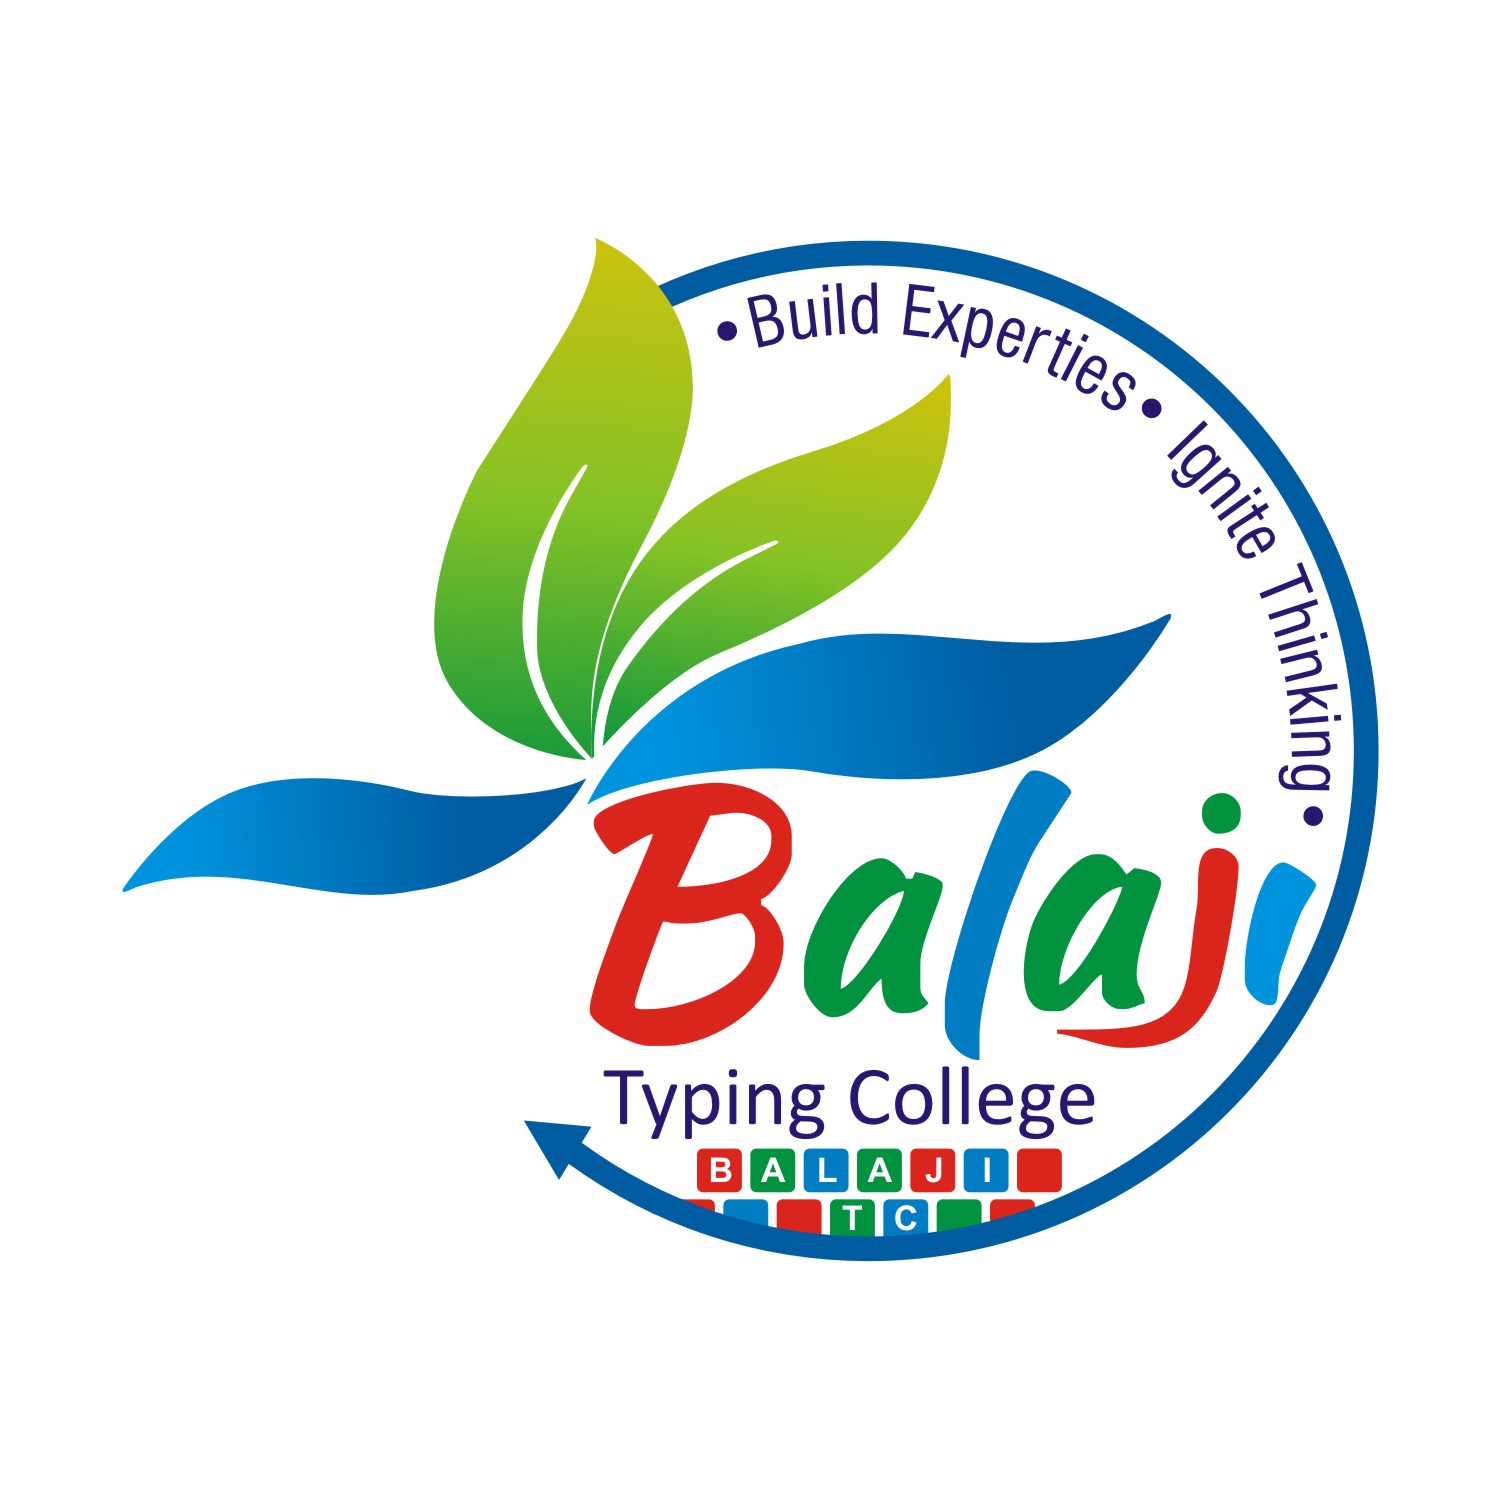 Balaji Typing College